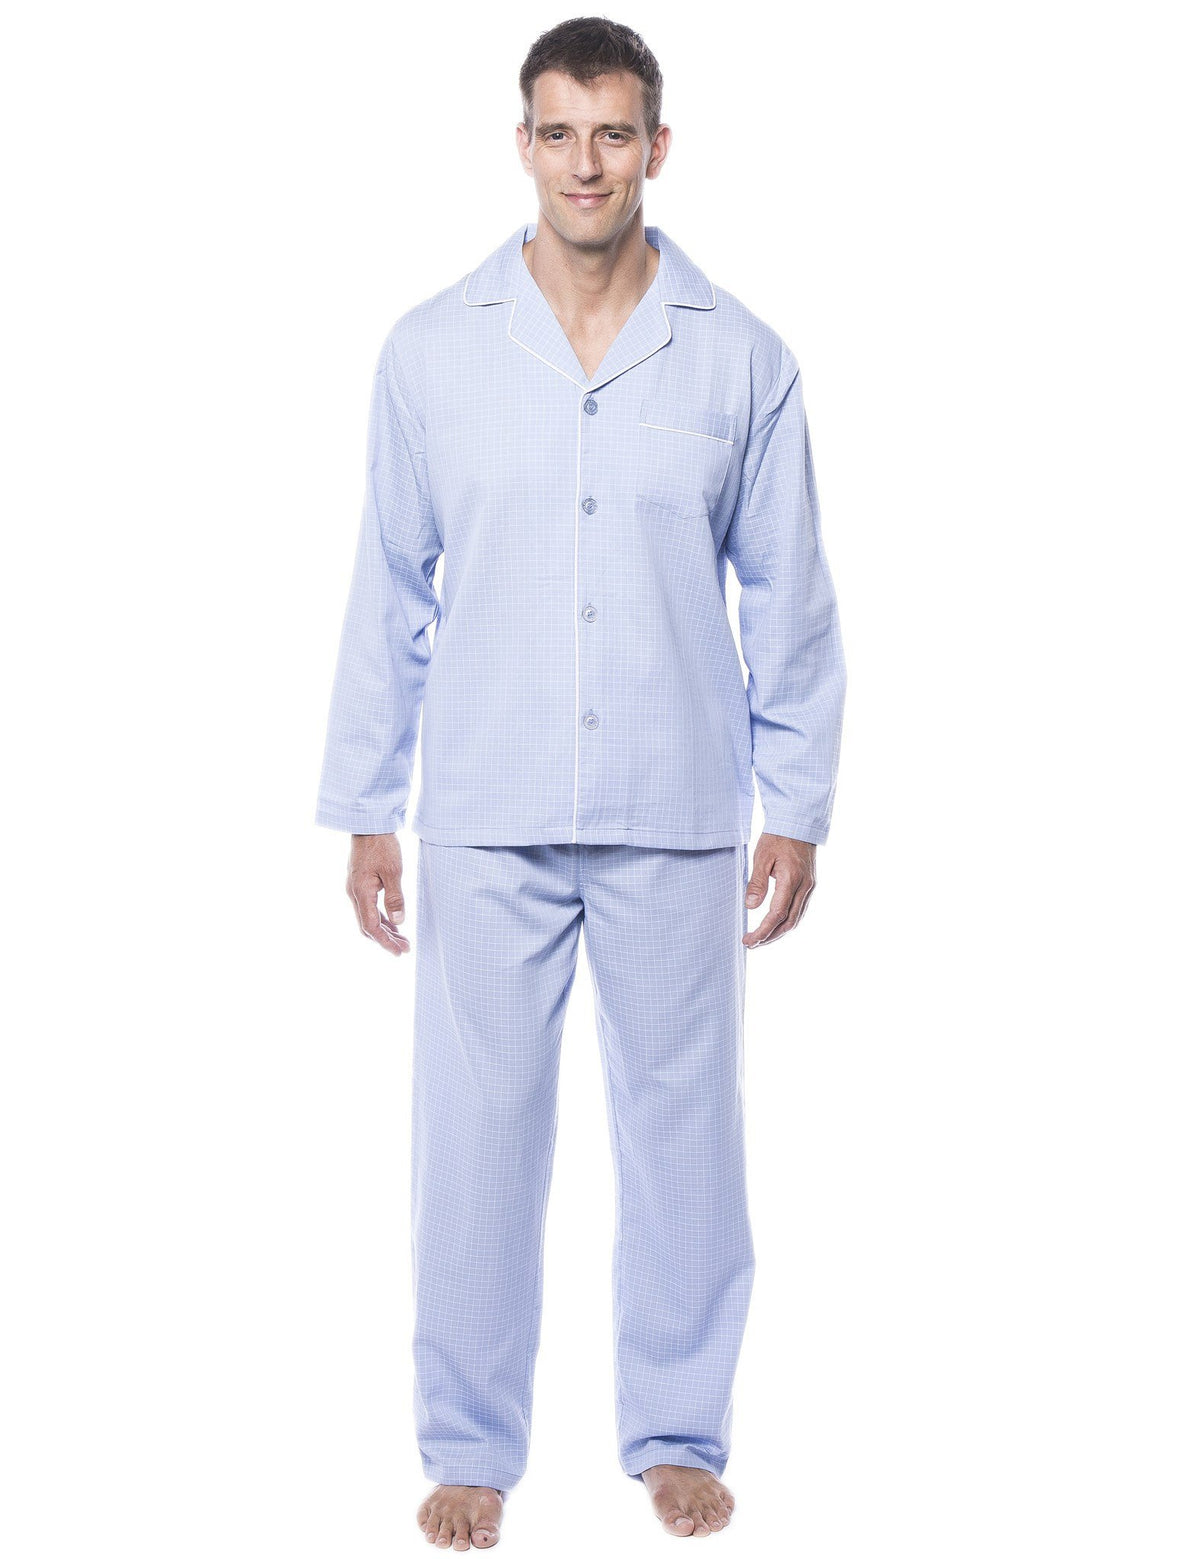 Men's 100% Woven Cotton Pajama Sleepwear Set - Micro Checks Light Blue